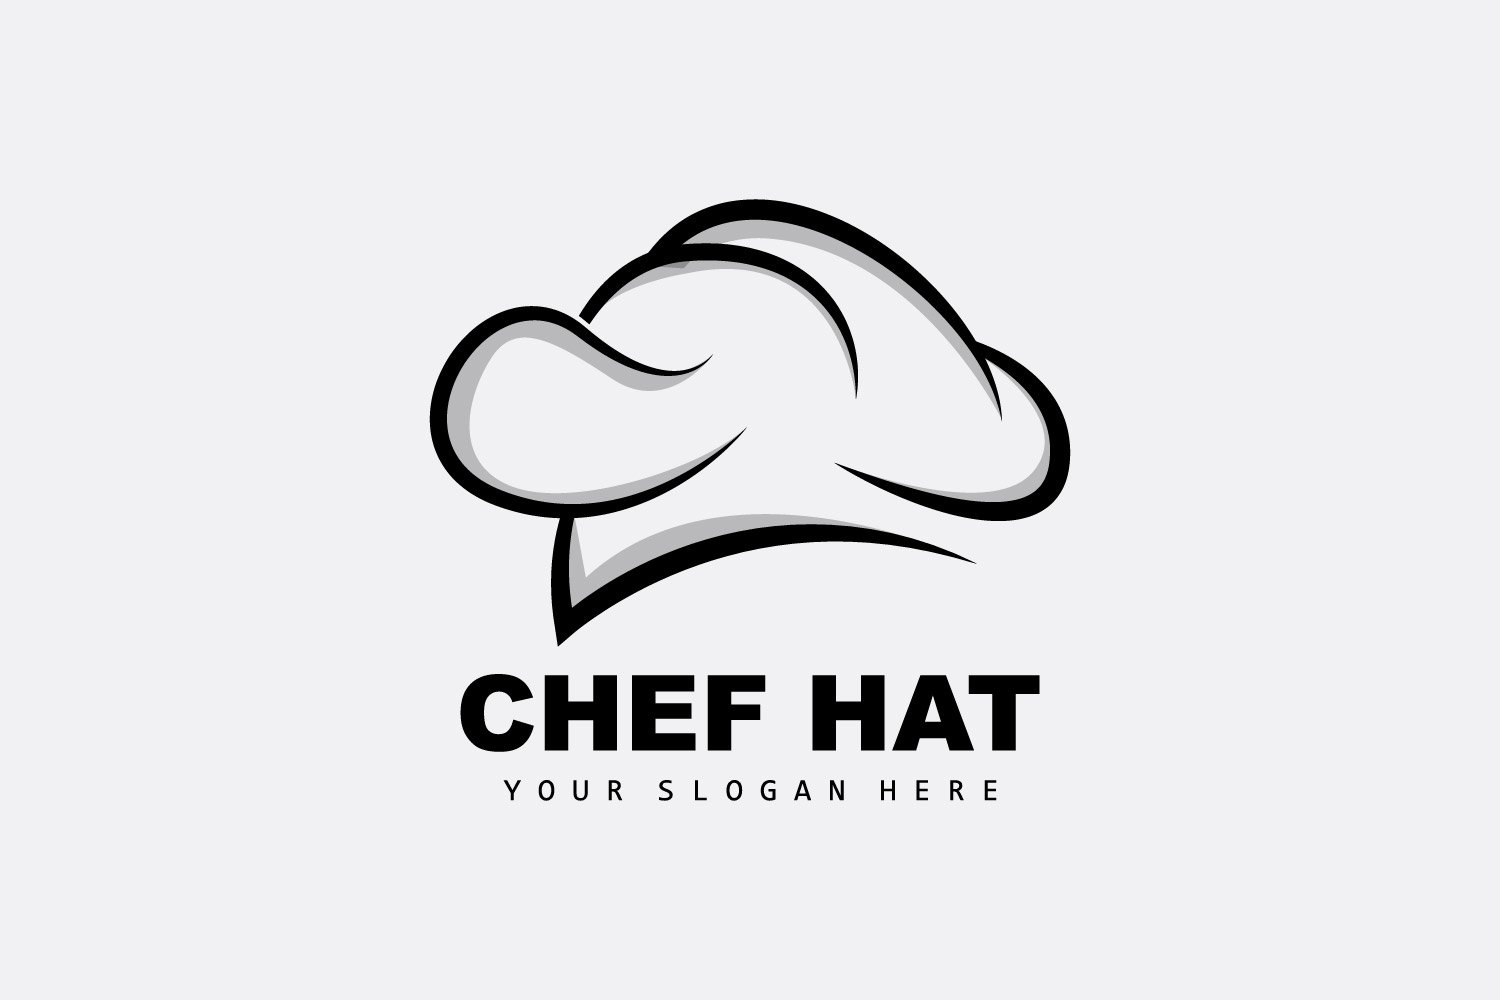 Chef Logo Design Cooking Inspiration vectorV19